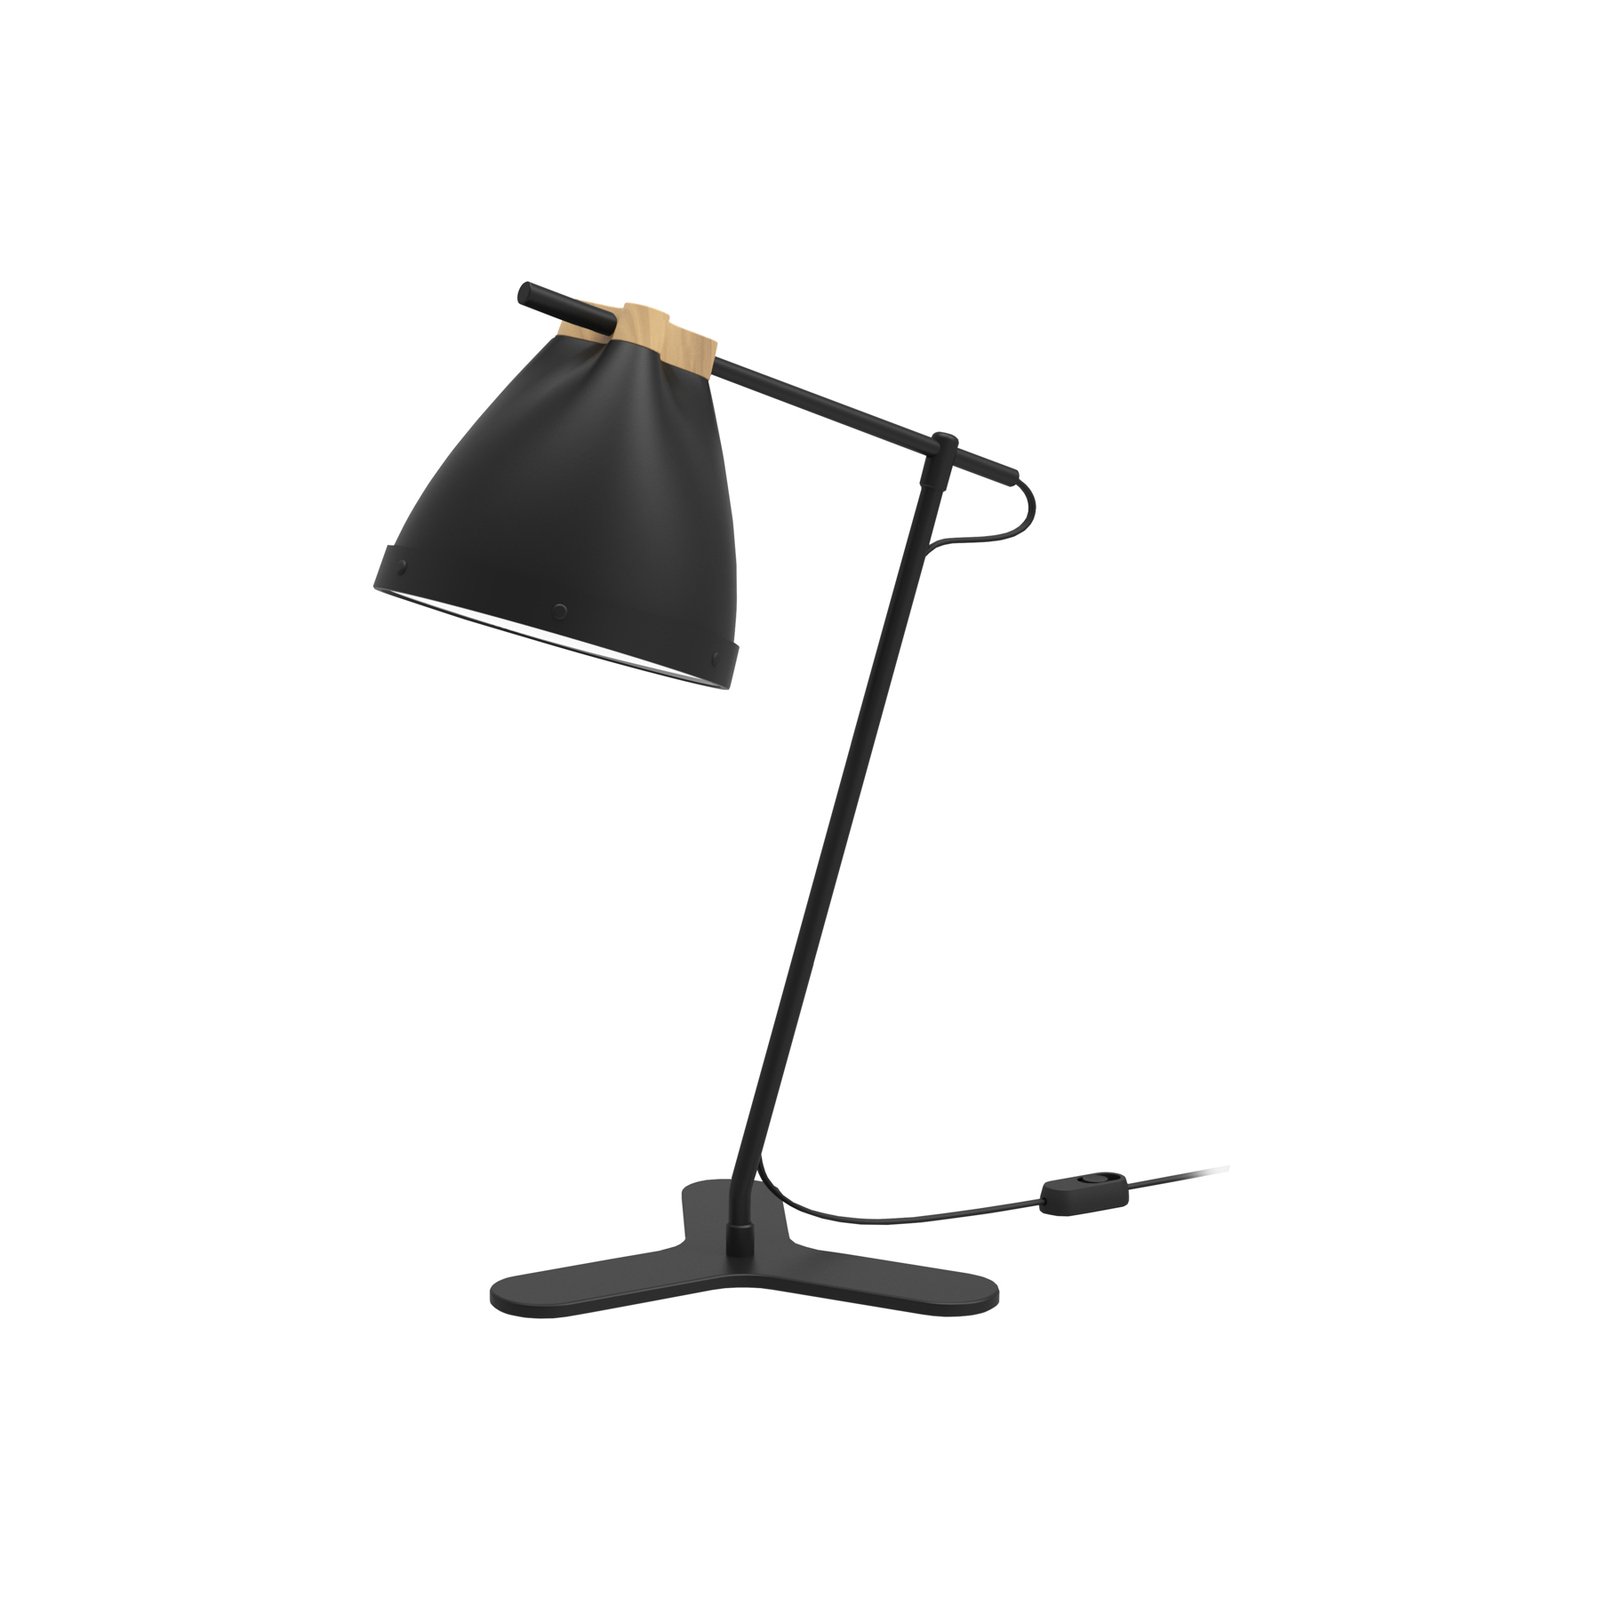 Aluminor Clarelle table lamp, black